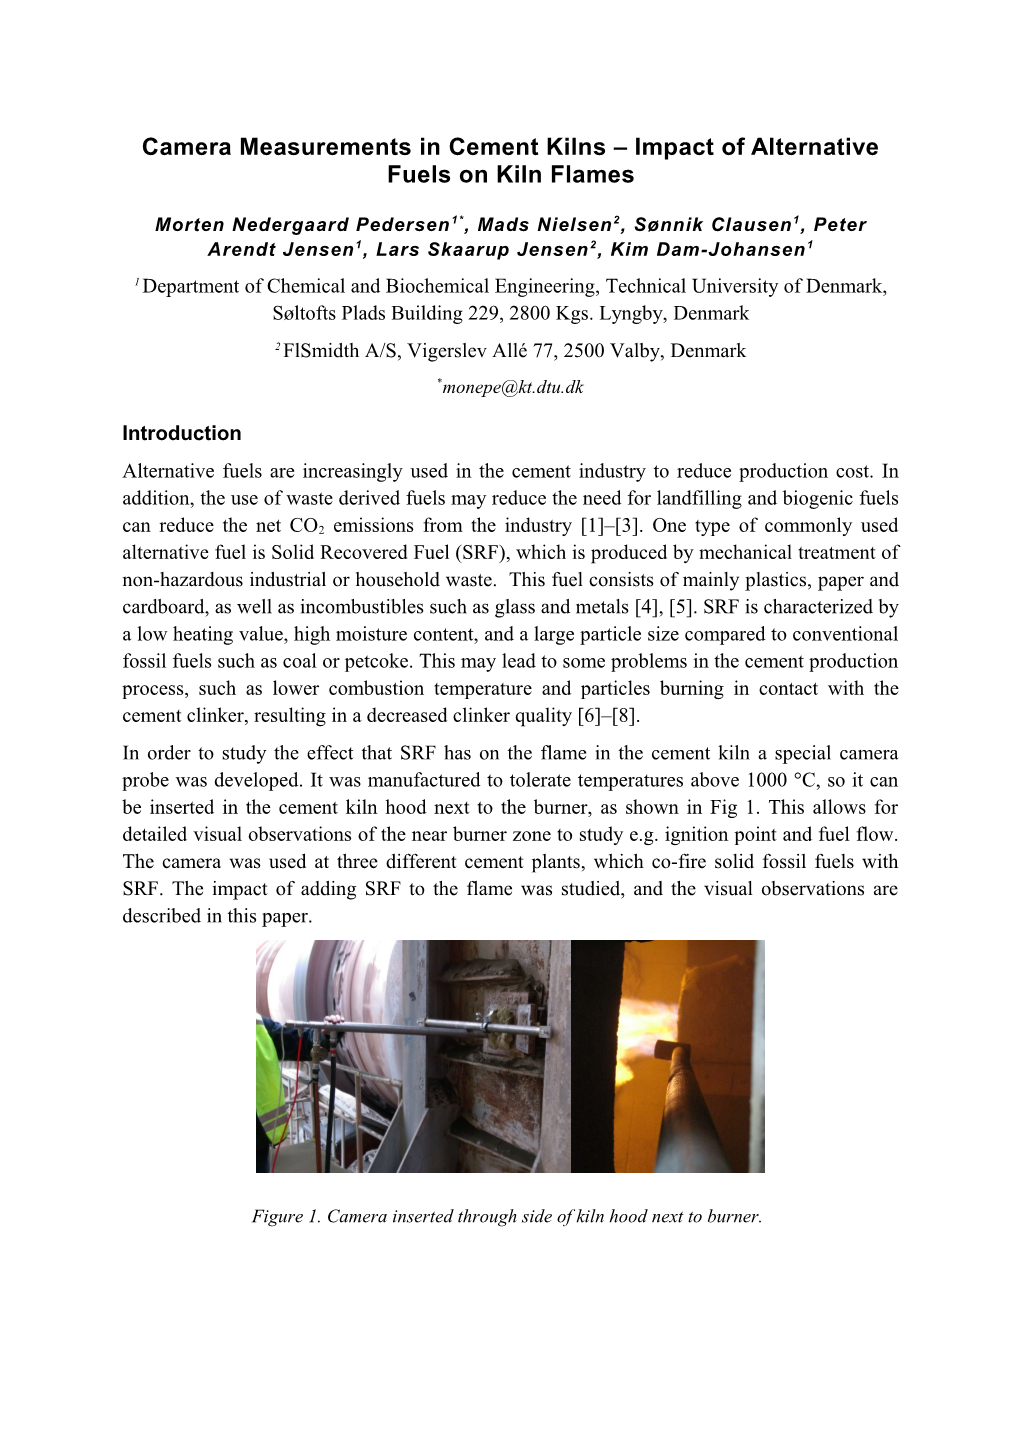 Camera Measurements in Cement Kilns Impact of Alternative Fuels on Kiln Flames